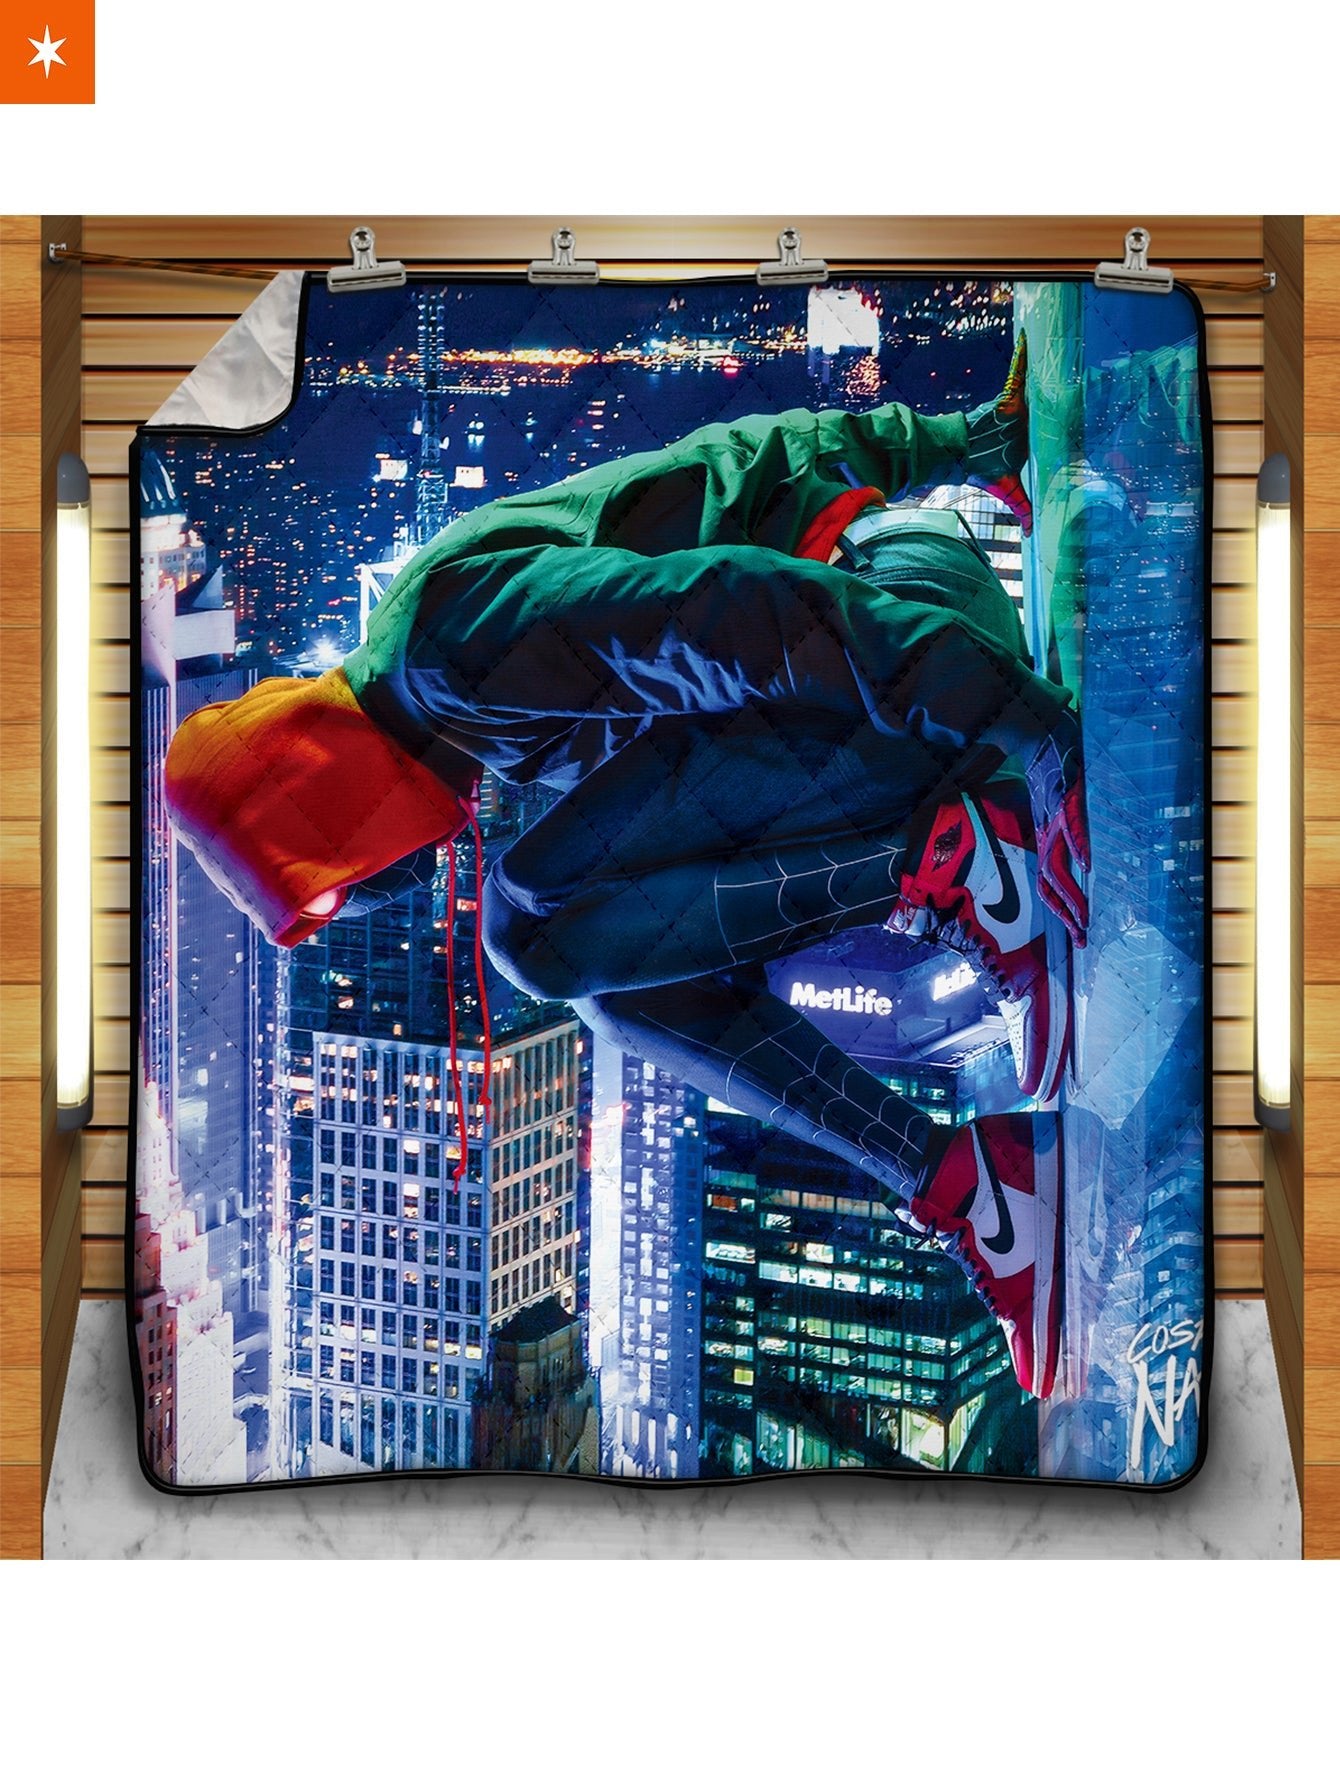 Fandomaniax - Leap Of Faith - Signed Quilt Blanket